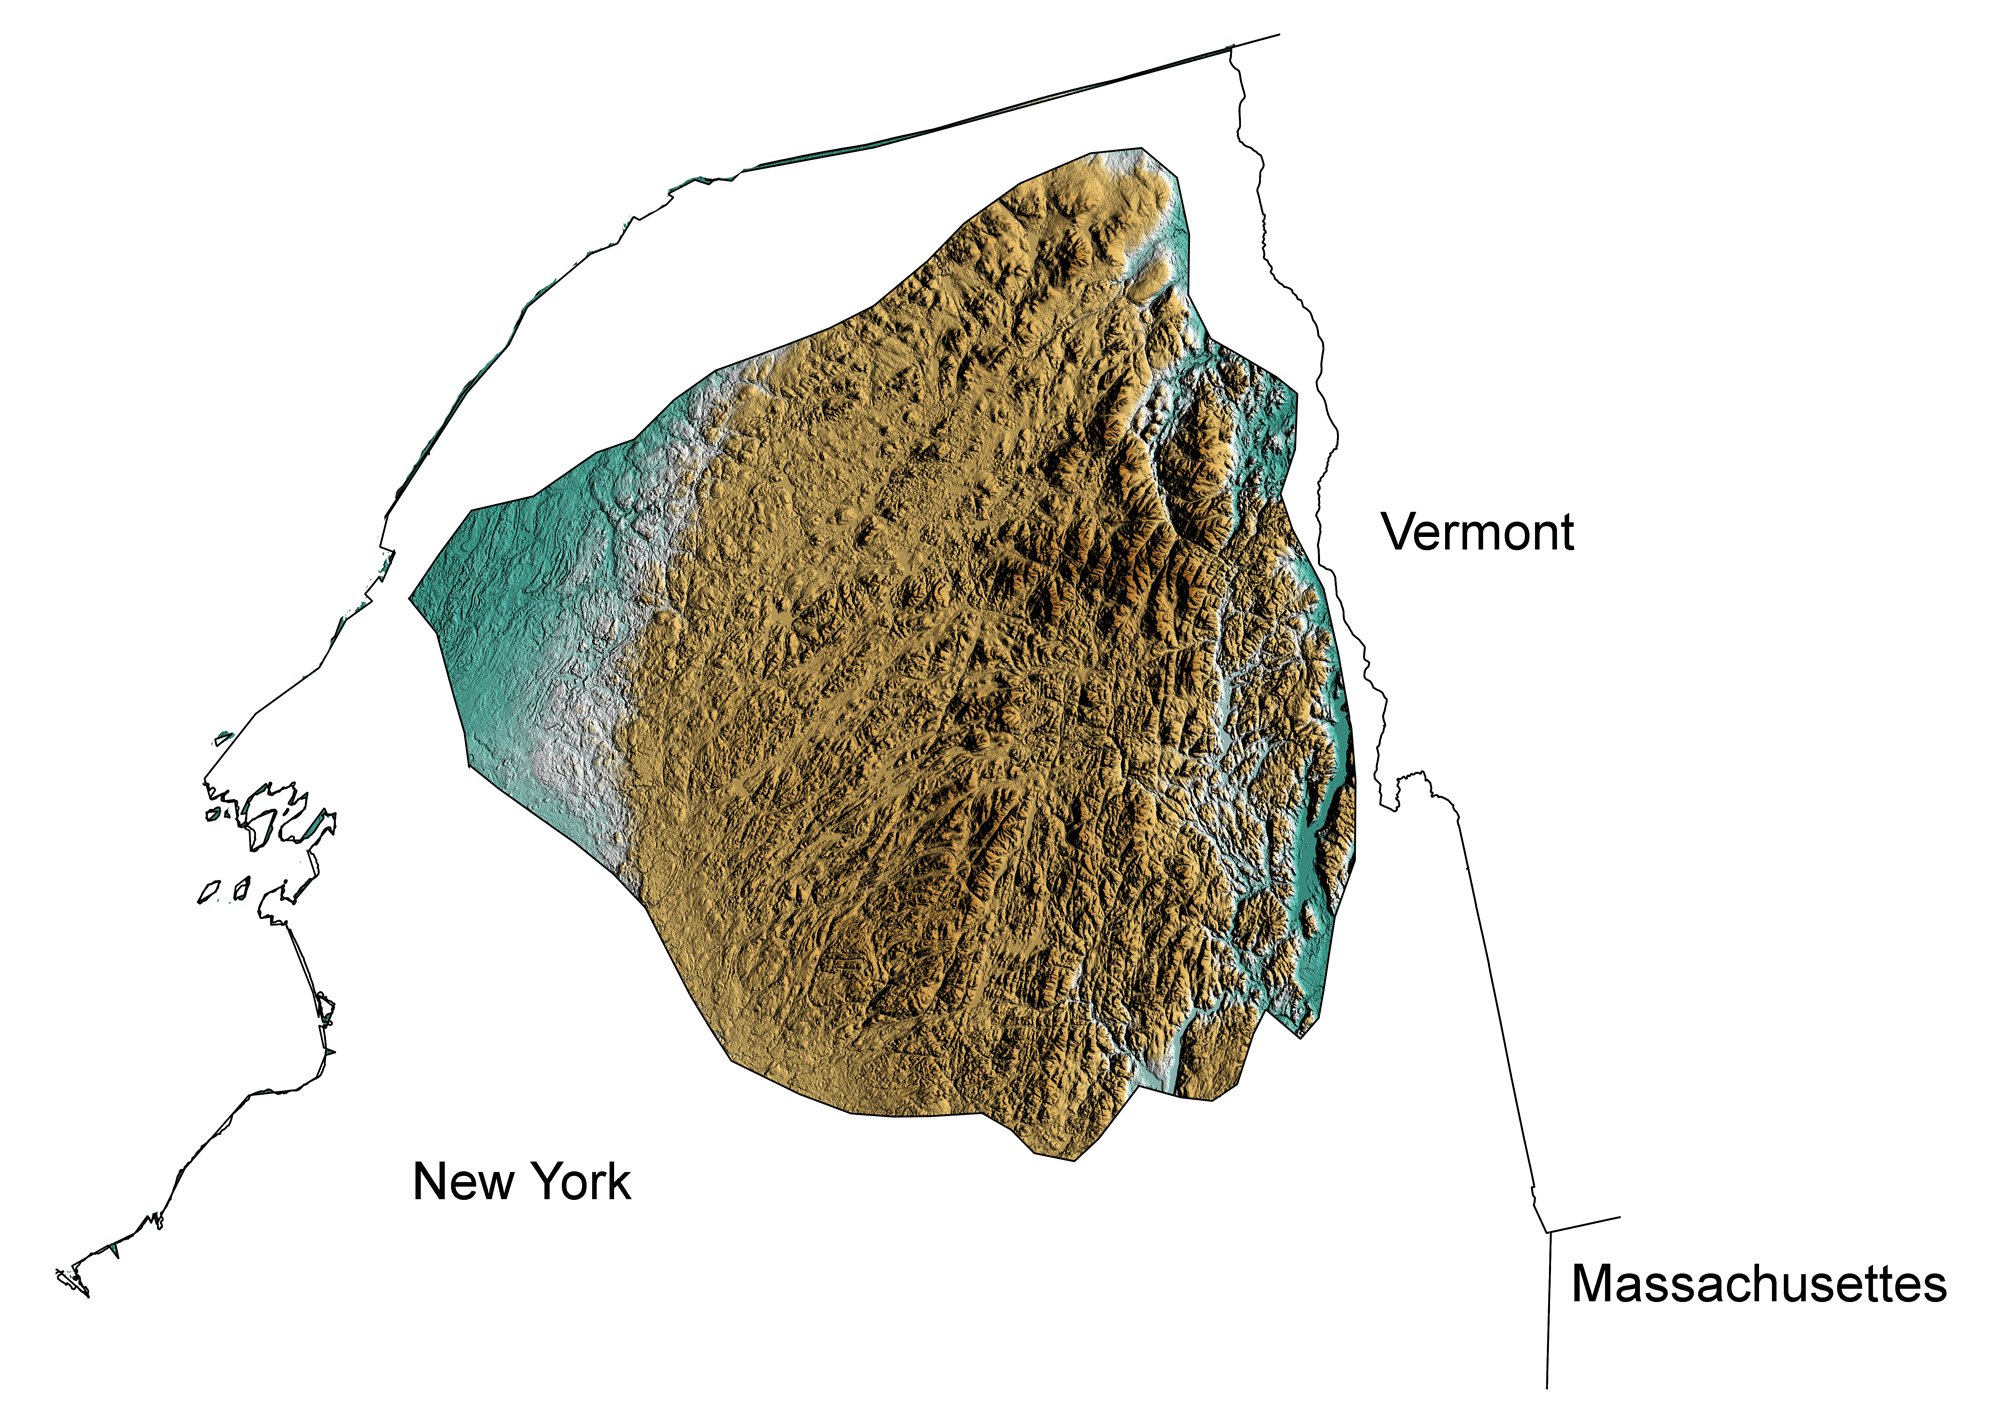 Topographic map of the Adirondacks region of New York State.